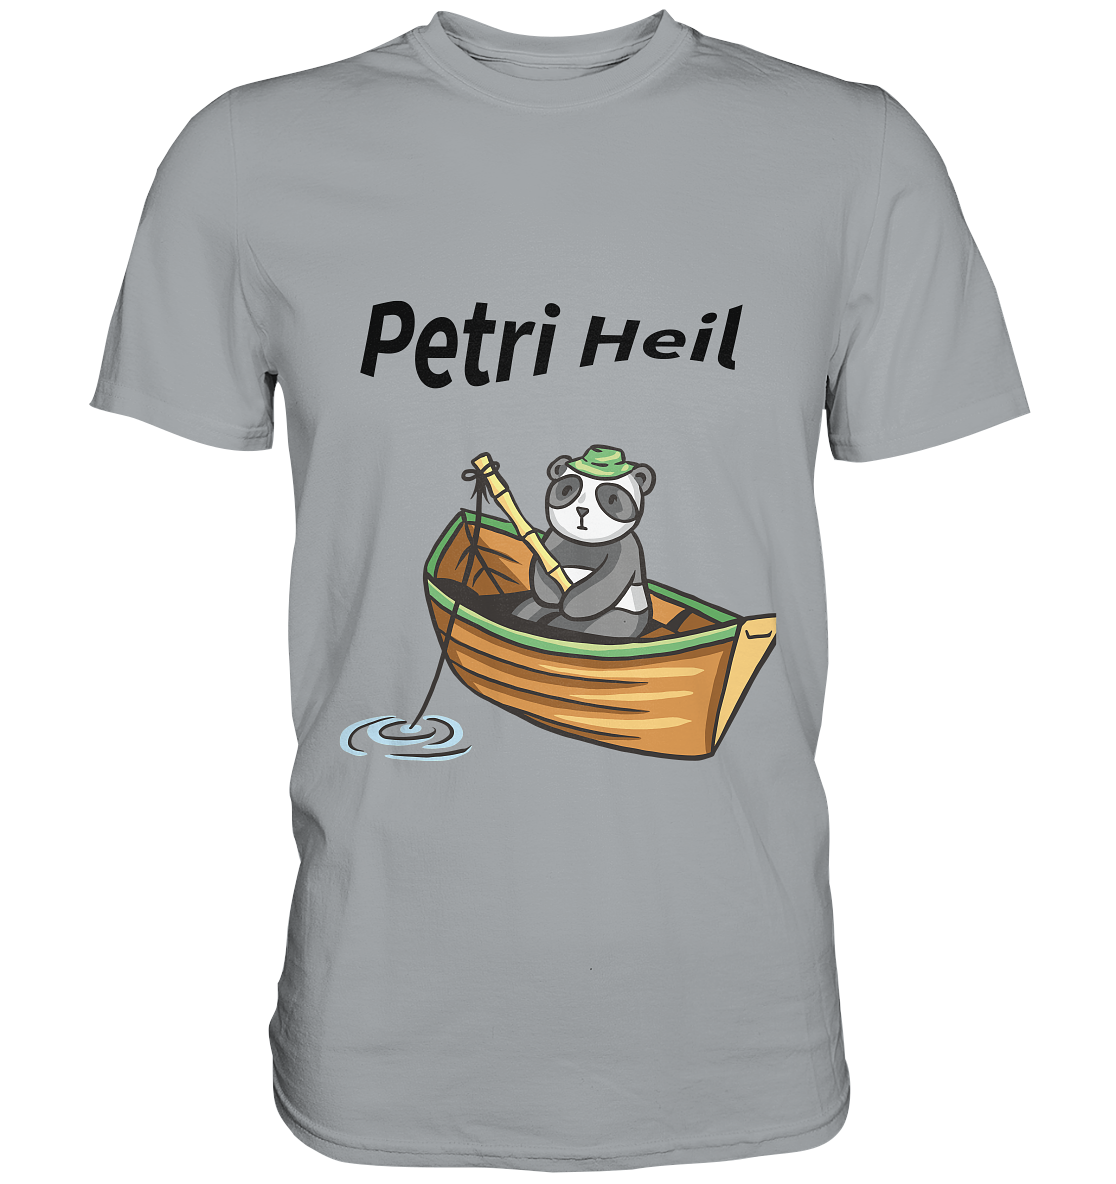 Petri-Heil-Bär - Classic Shirt - Online Kaufhaus München